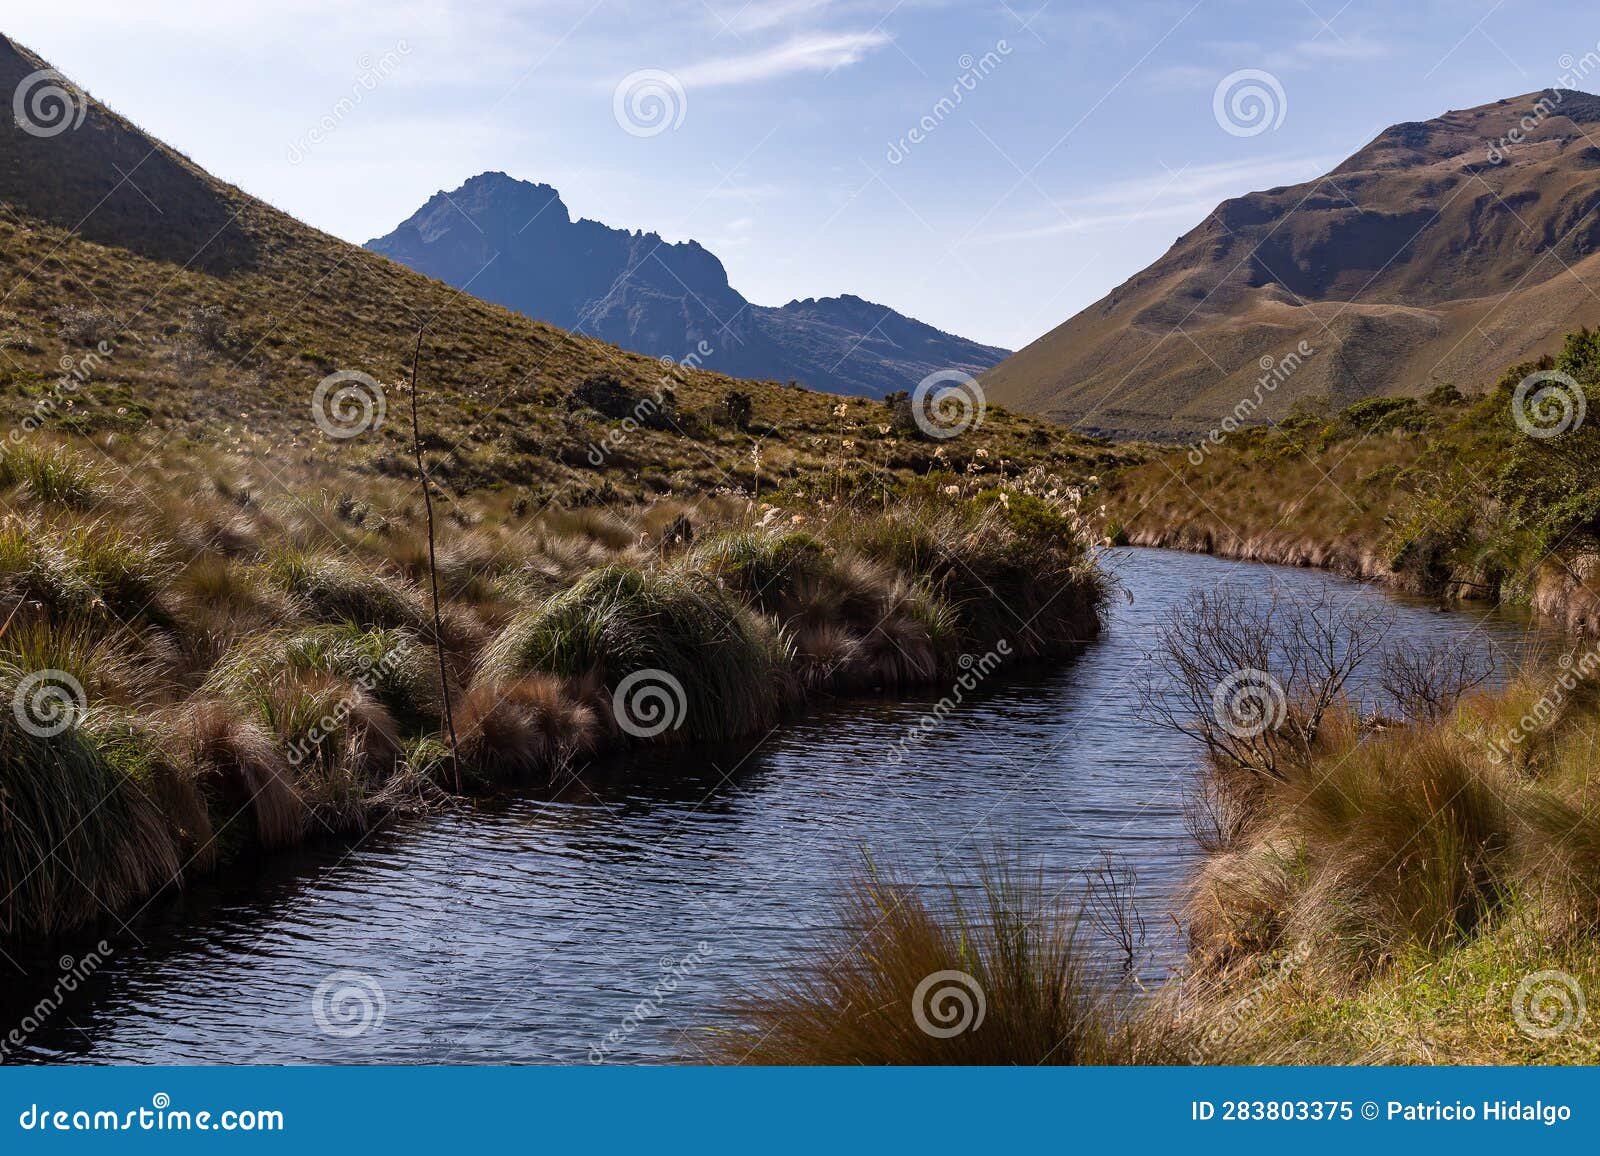 stream that is born in the mojanda lagoons